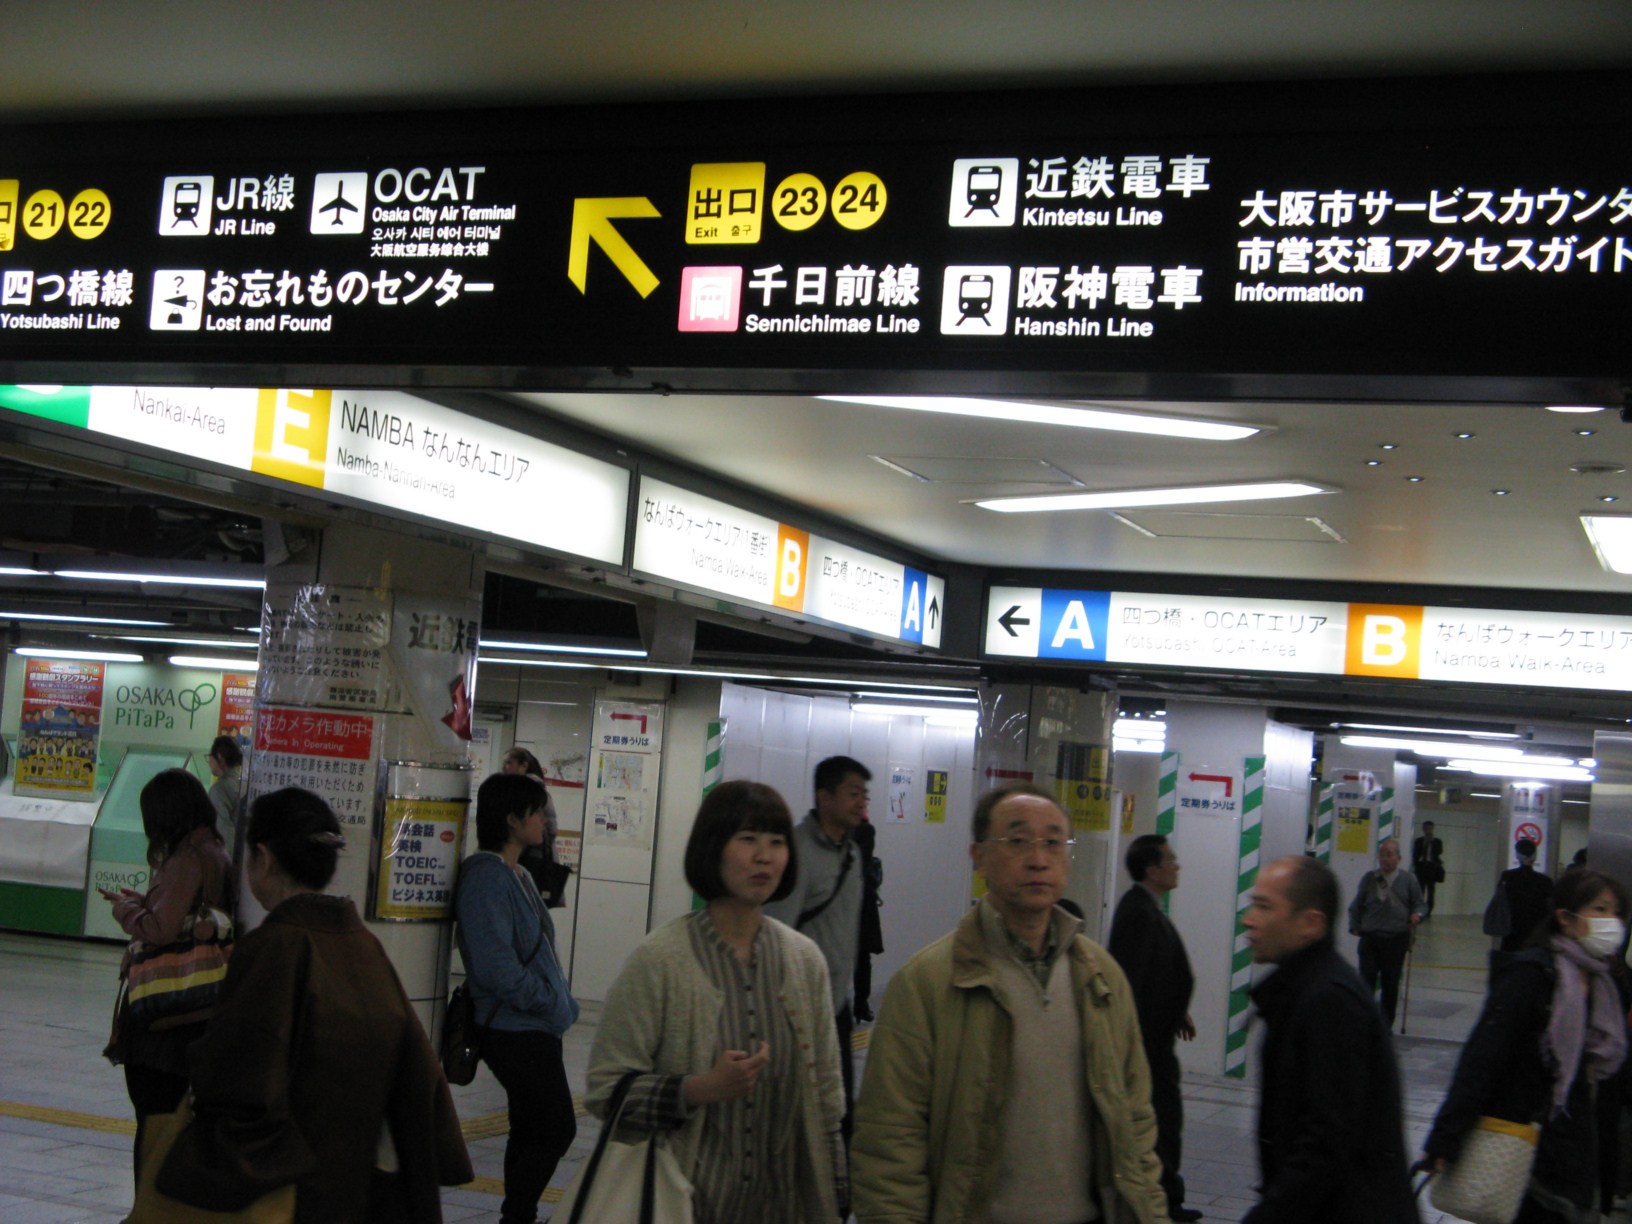 Metrostation 